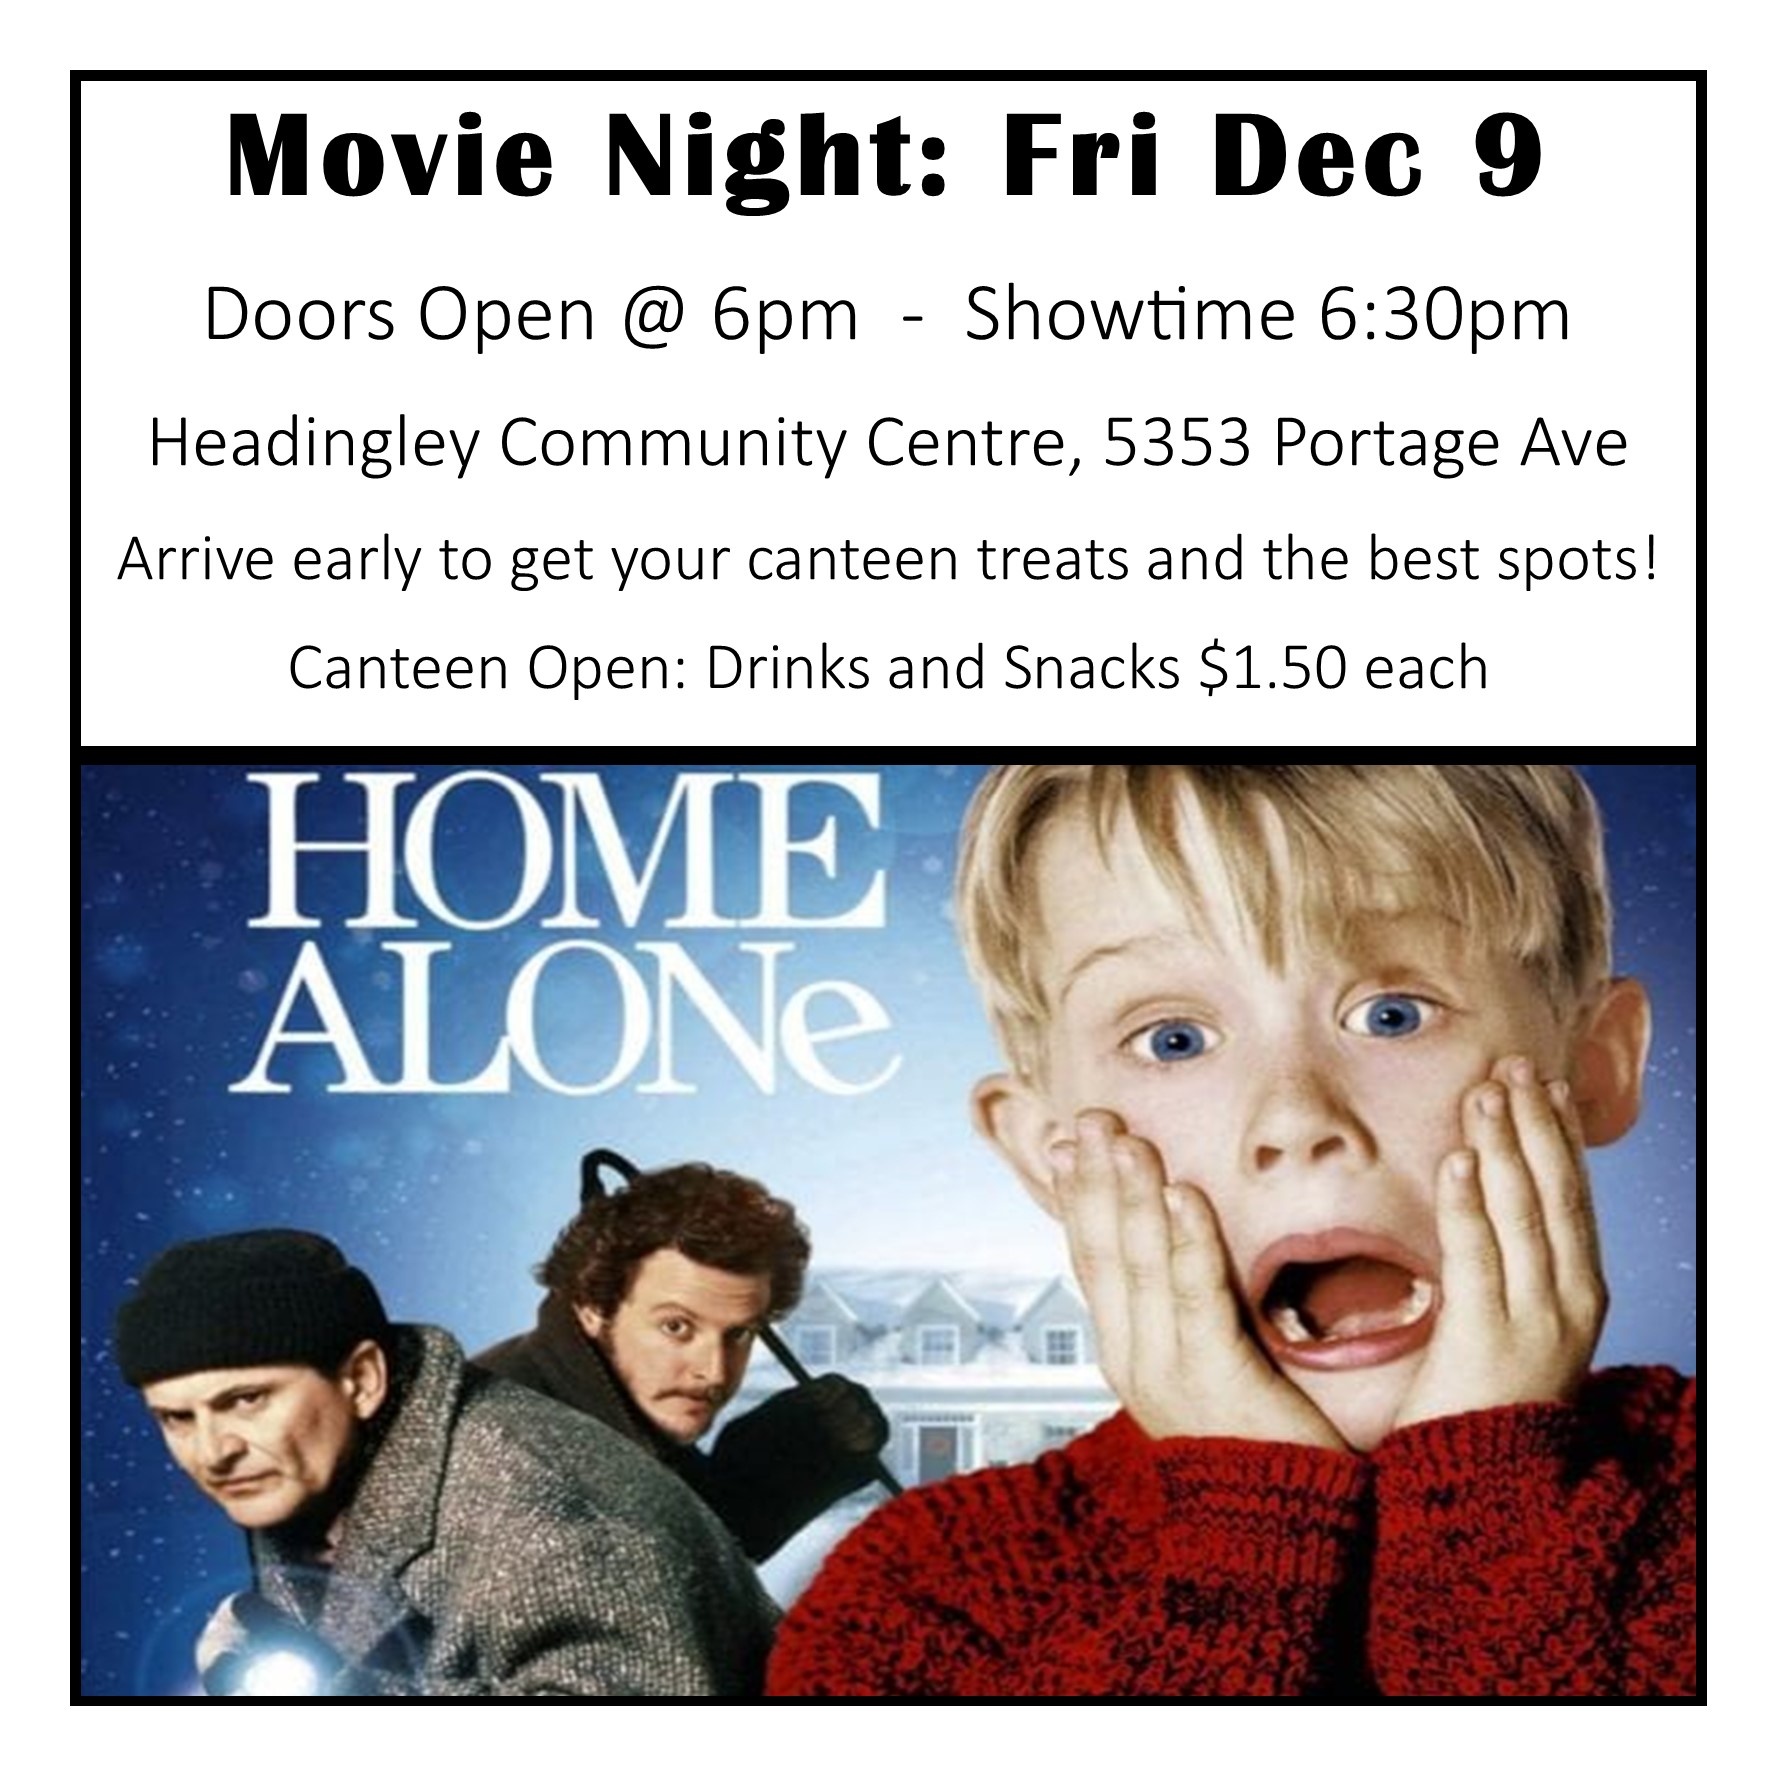 Family Movie Night – Home Alone